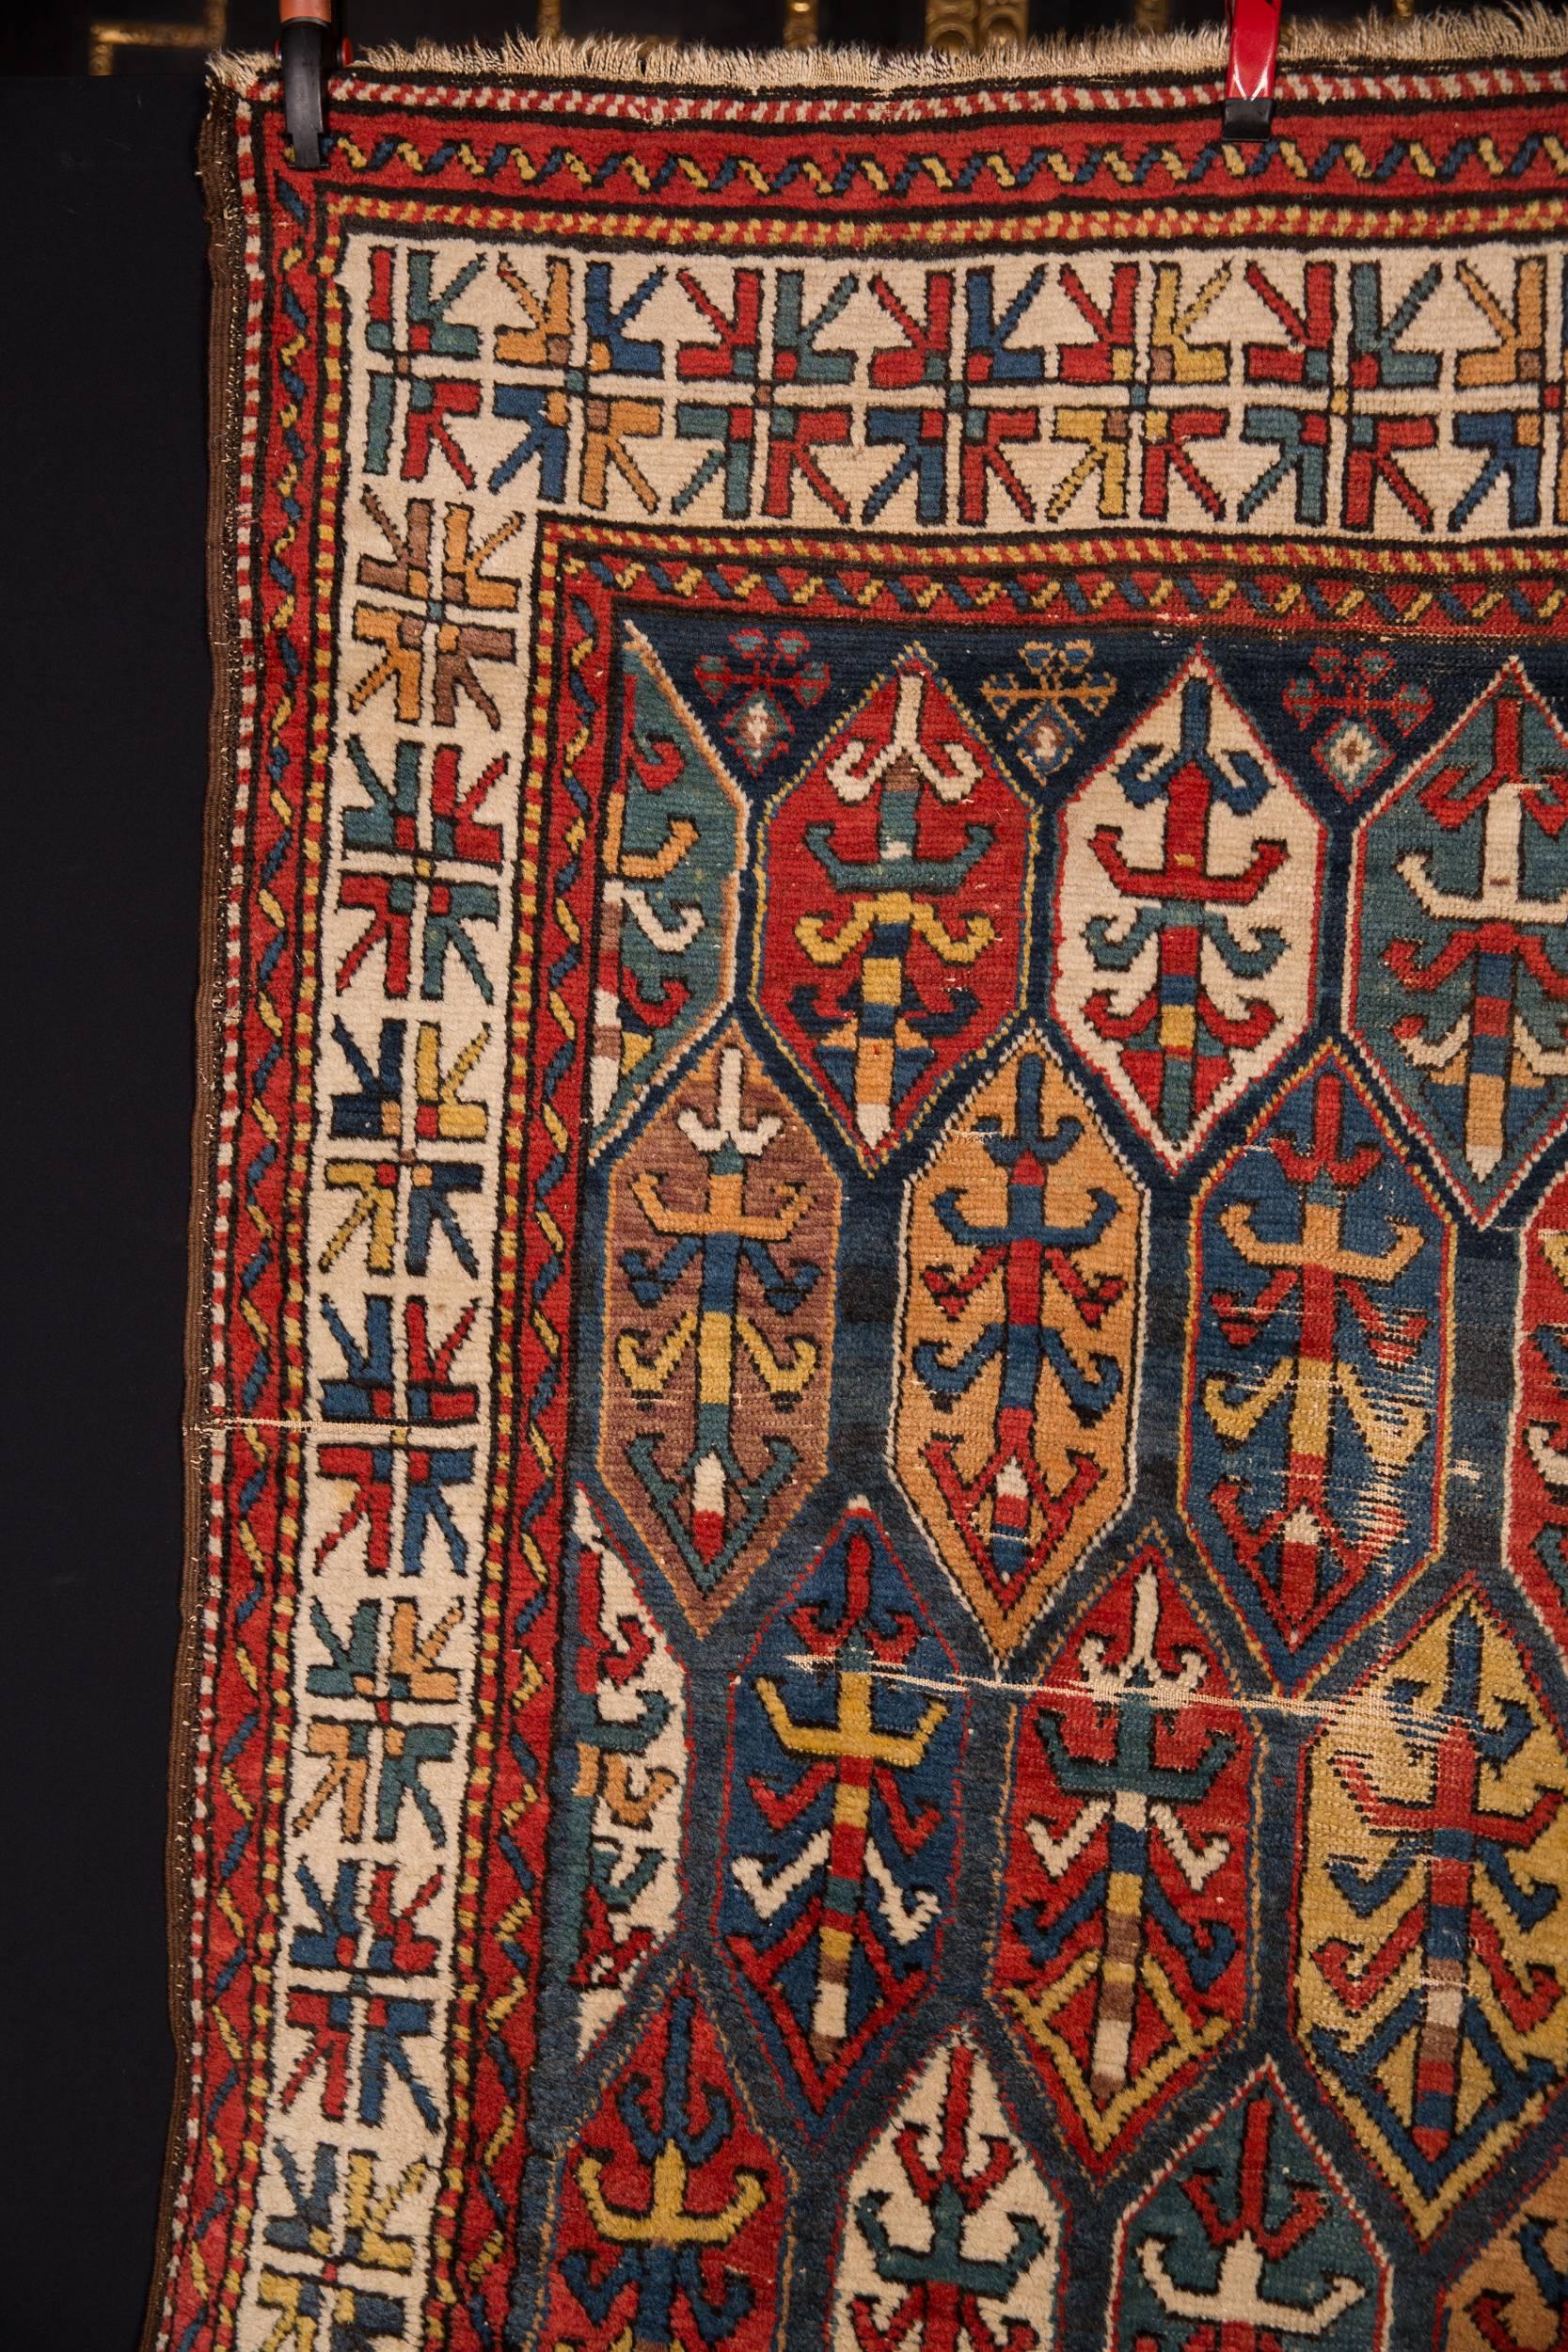 Rare Kazak carpet. In a good historical condition. See detail pictures. Measures: 290 cm x 100 cm.